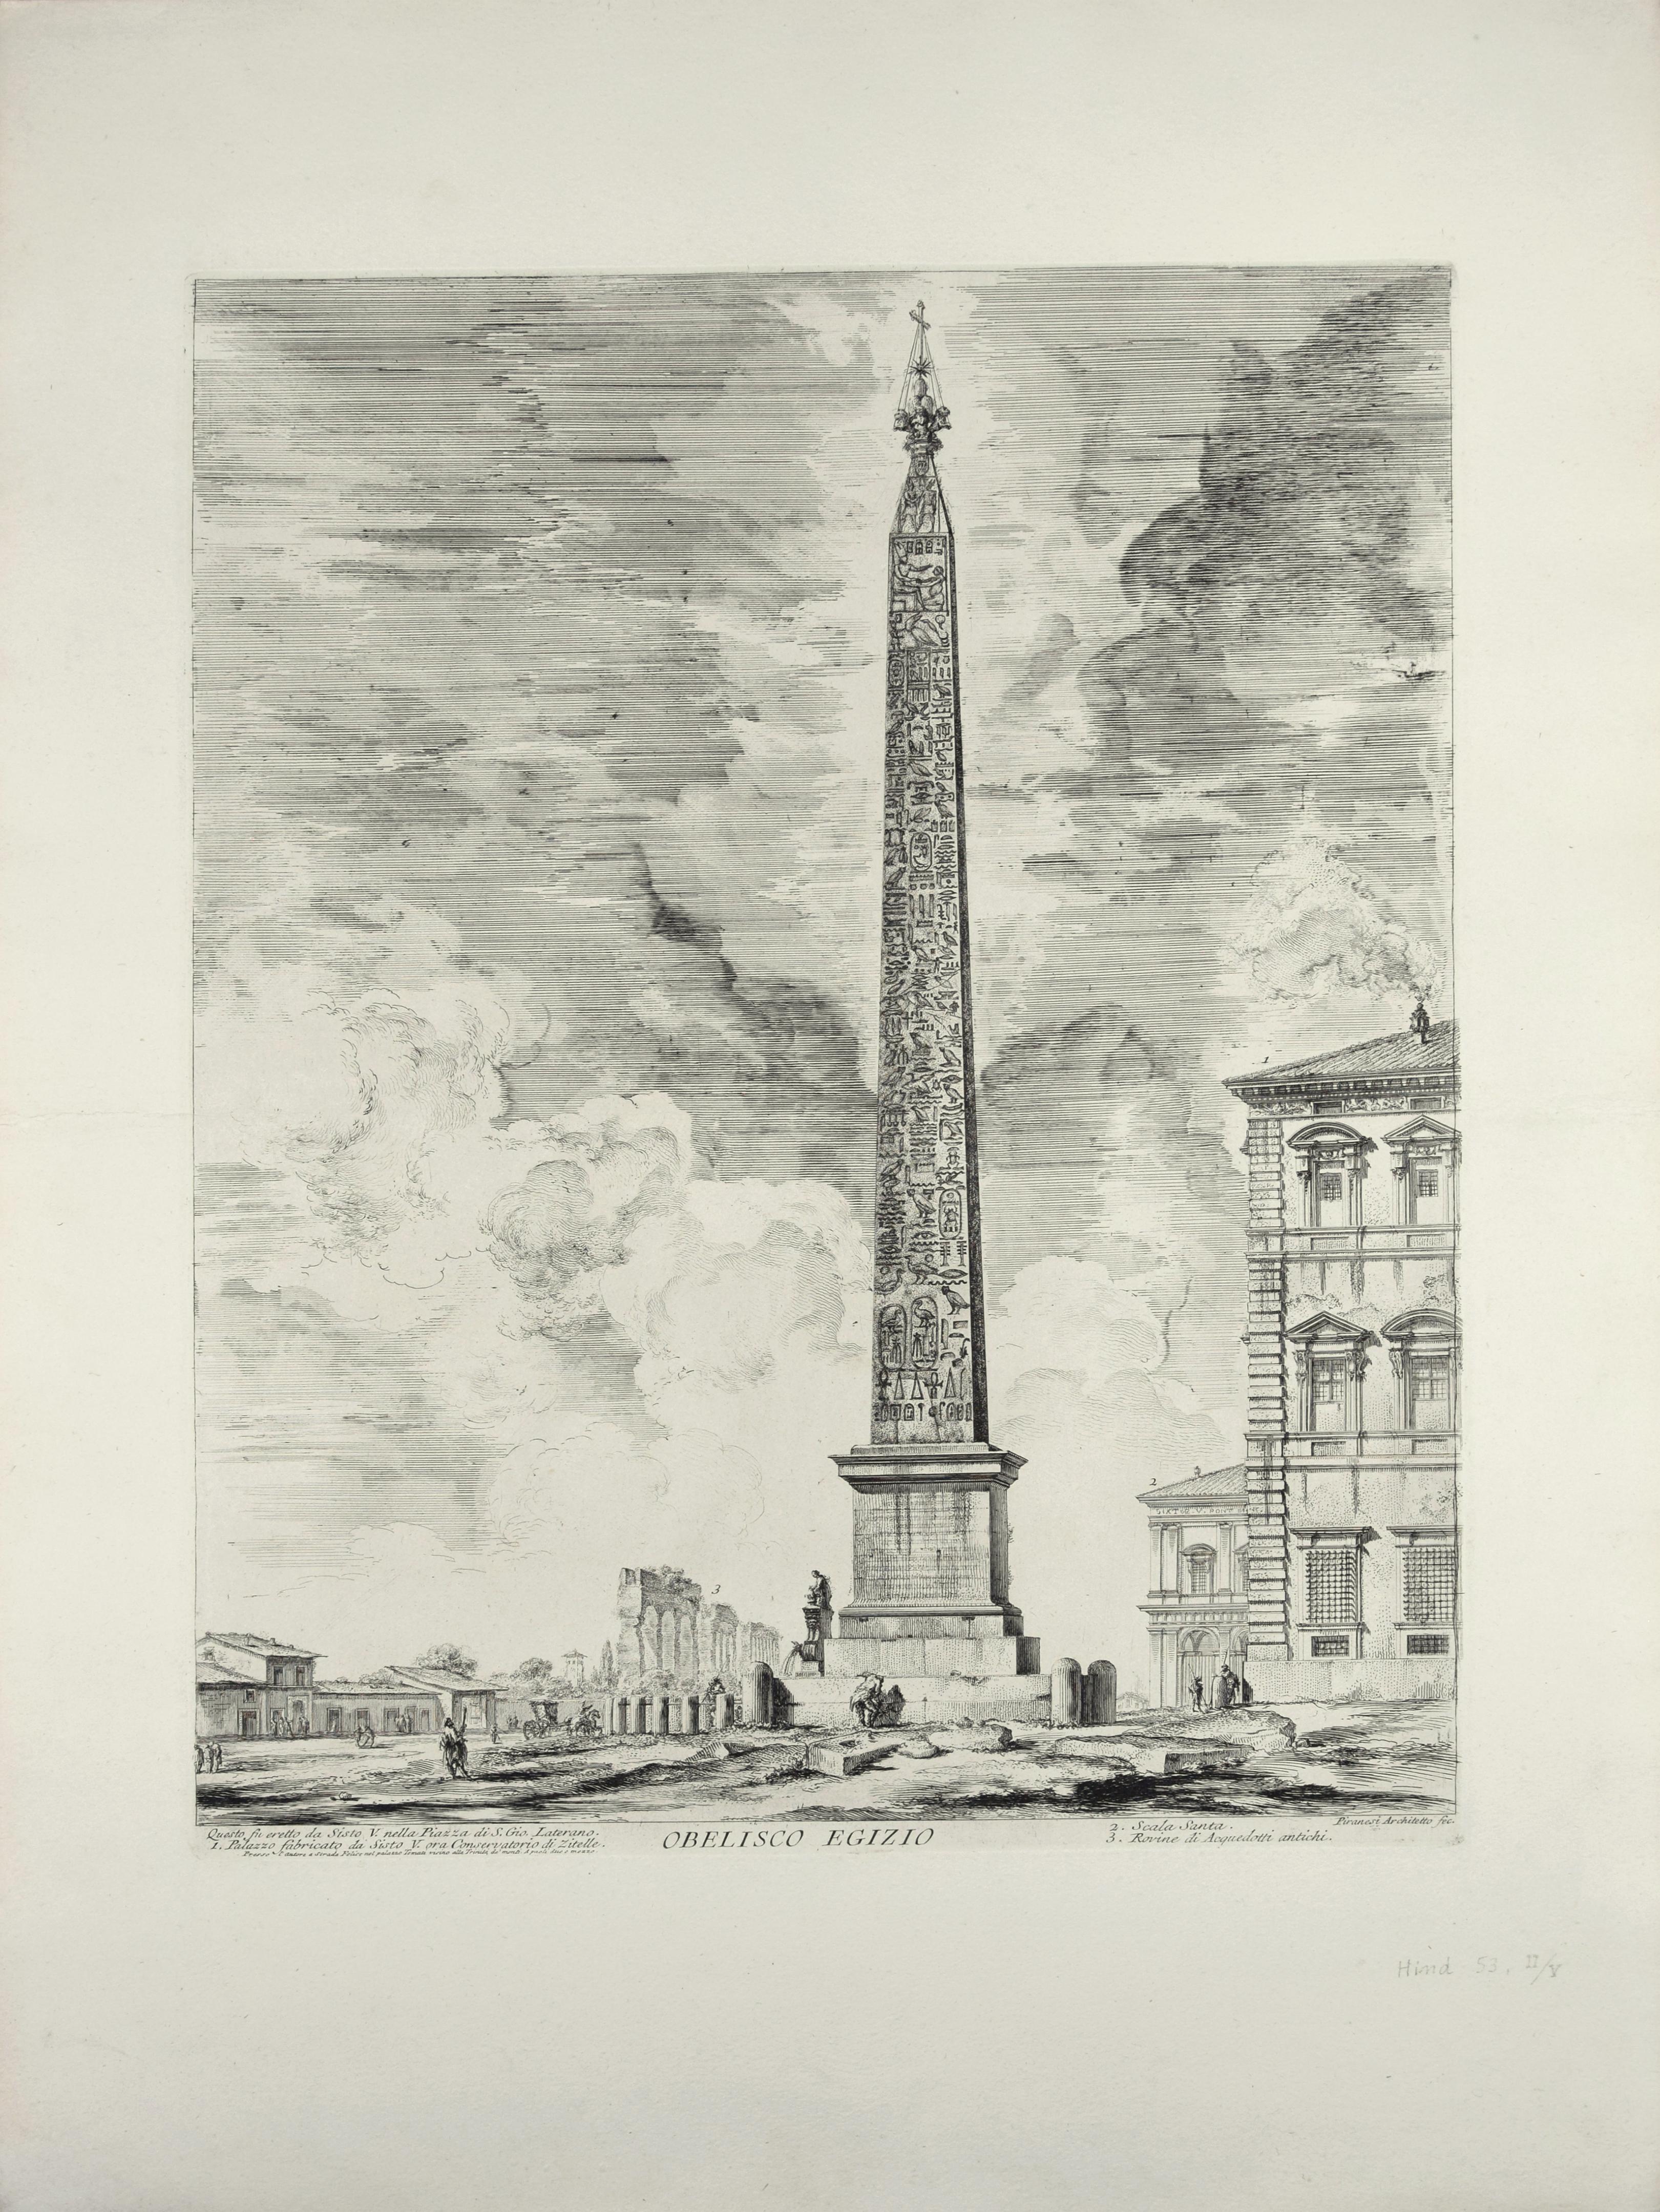 Giovanni Battista Piranesi Landscape Print - Obelisco Egizio (Egyptian Obelisk) - Etching by G. B. Piranesi